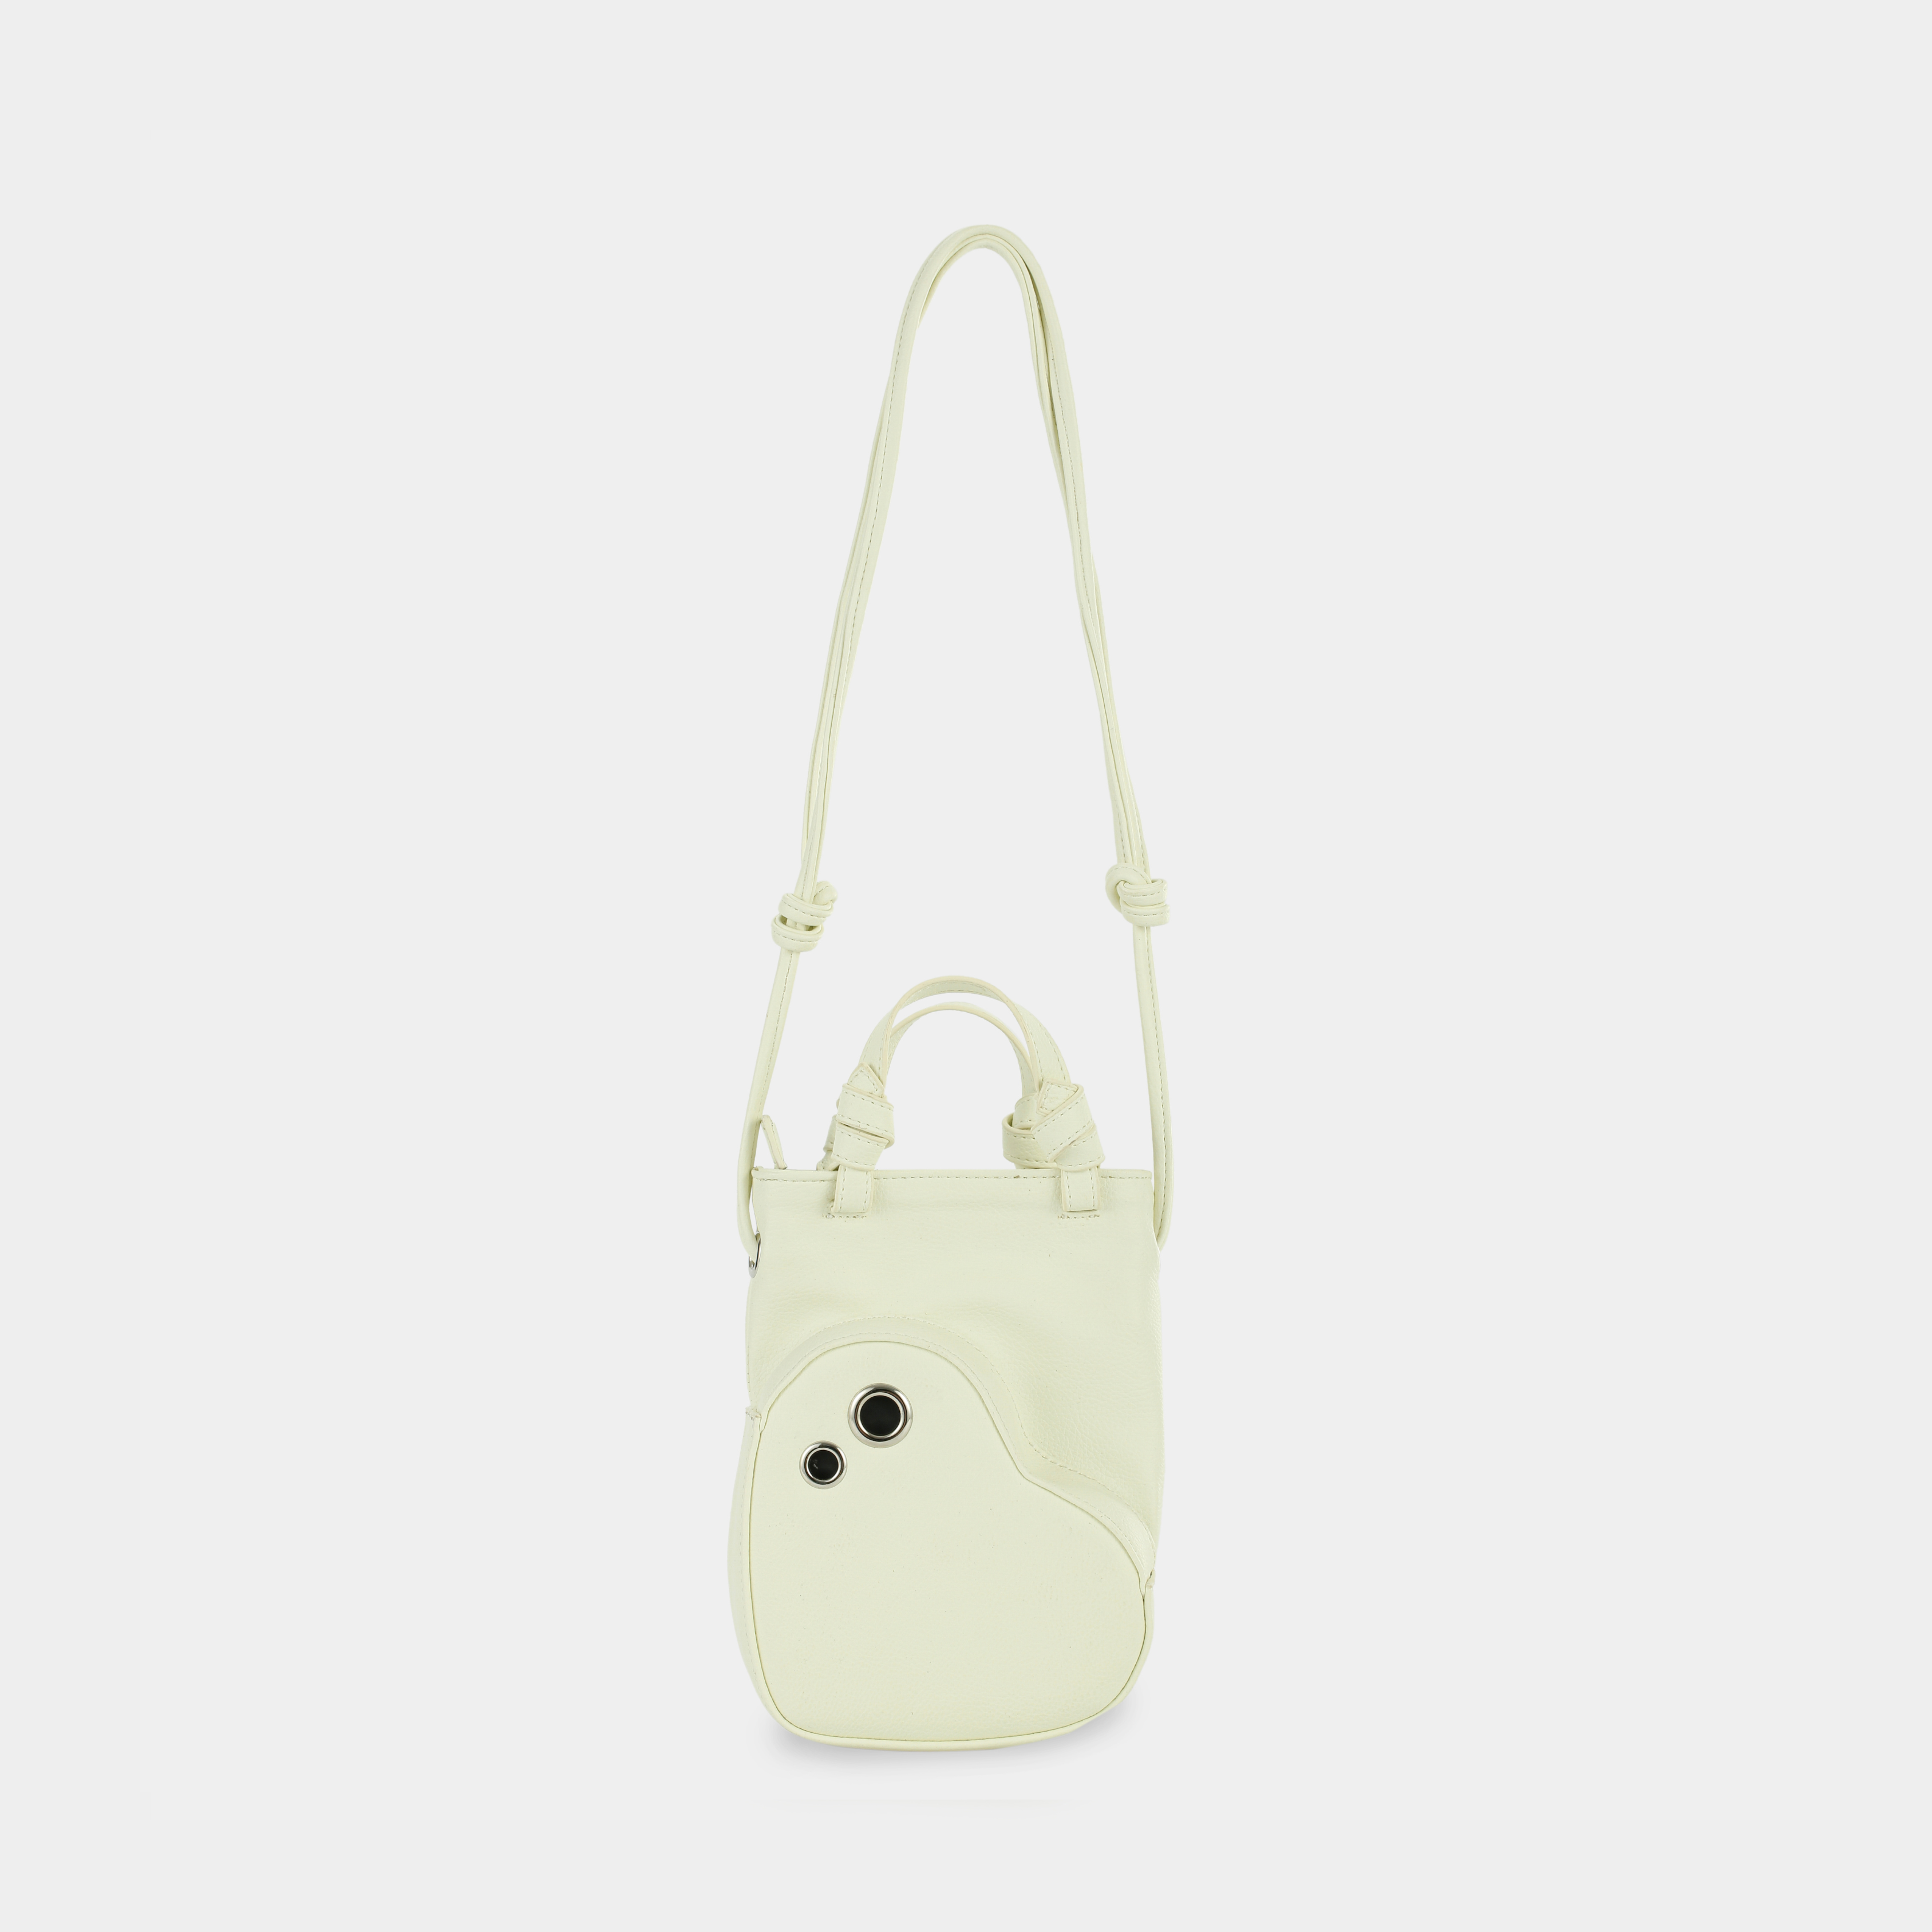 Growing Heart handbag in cream white color